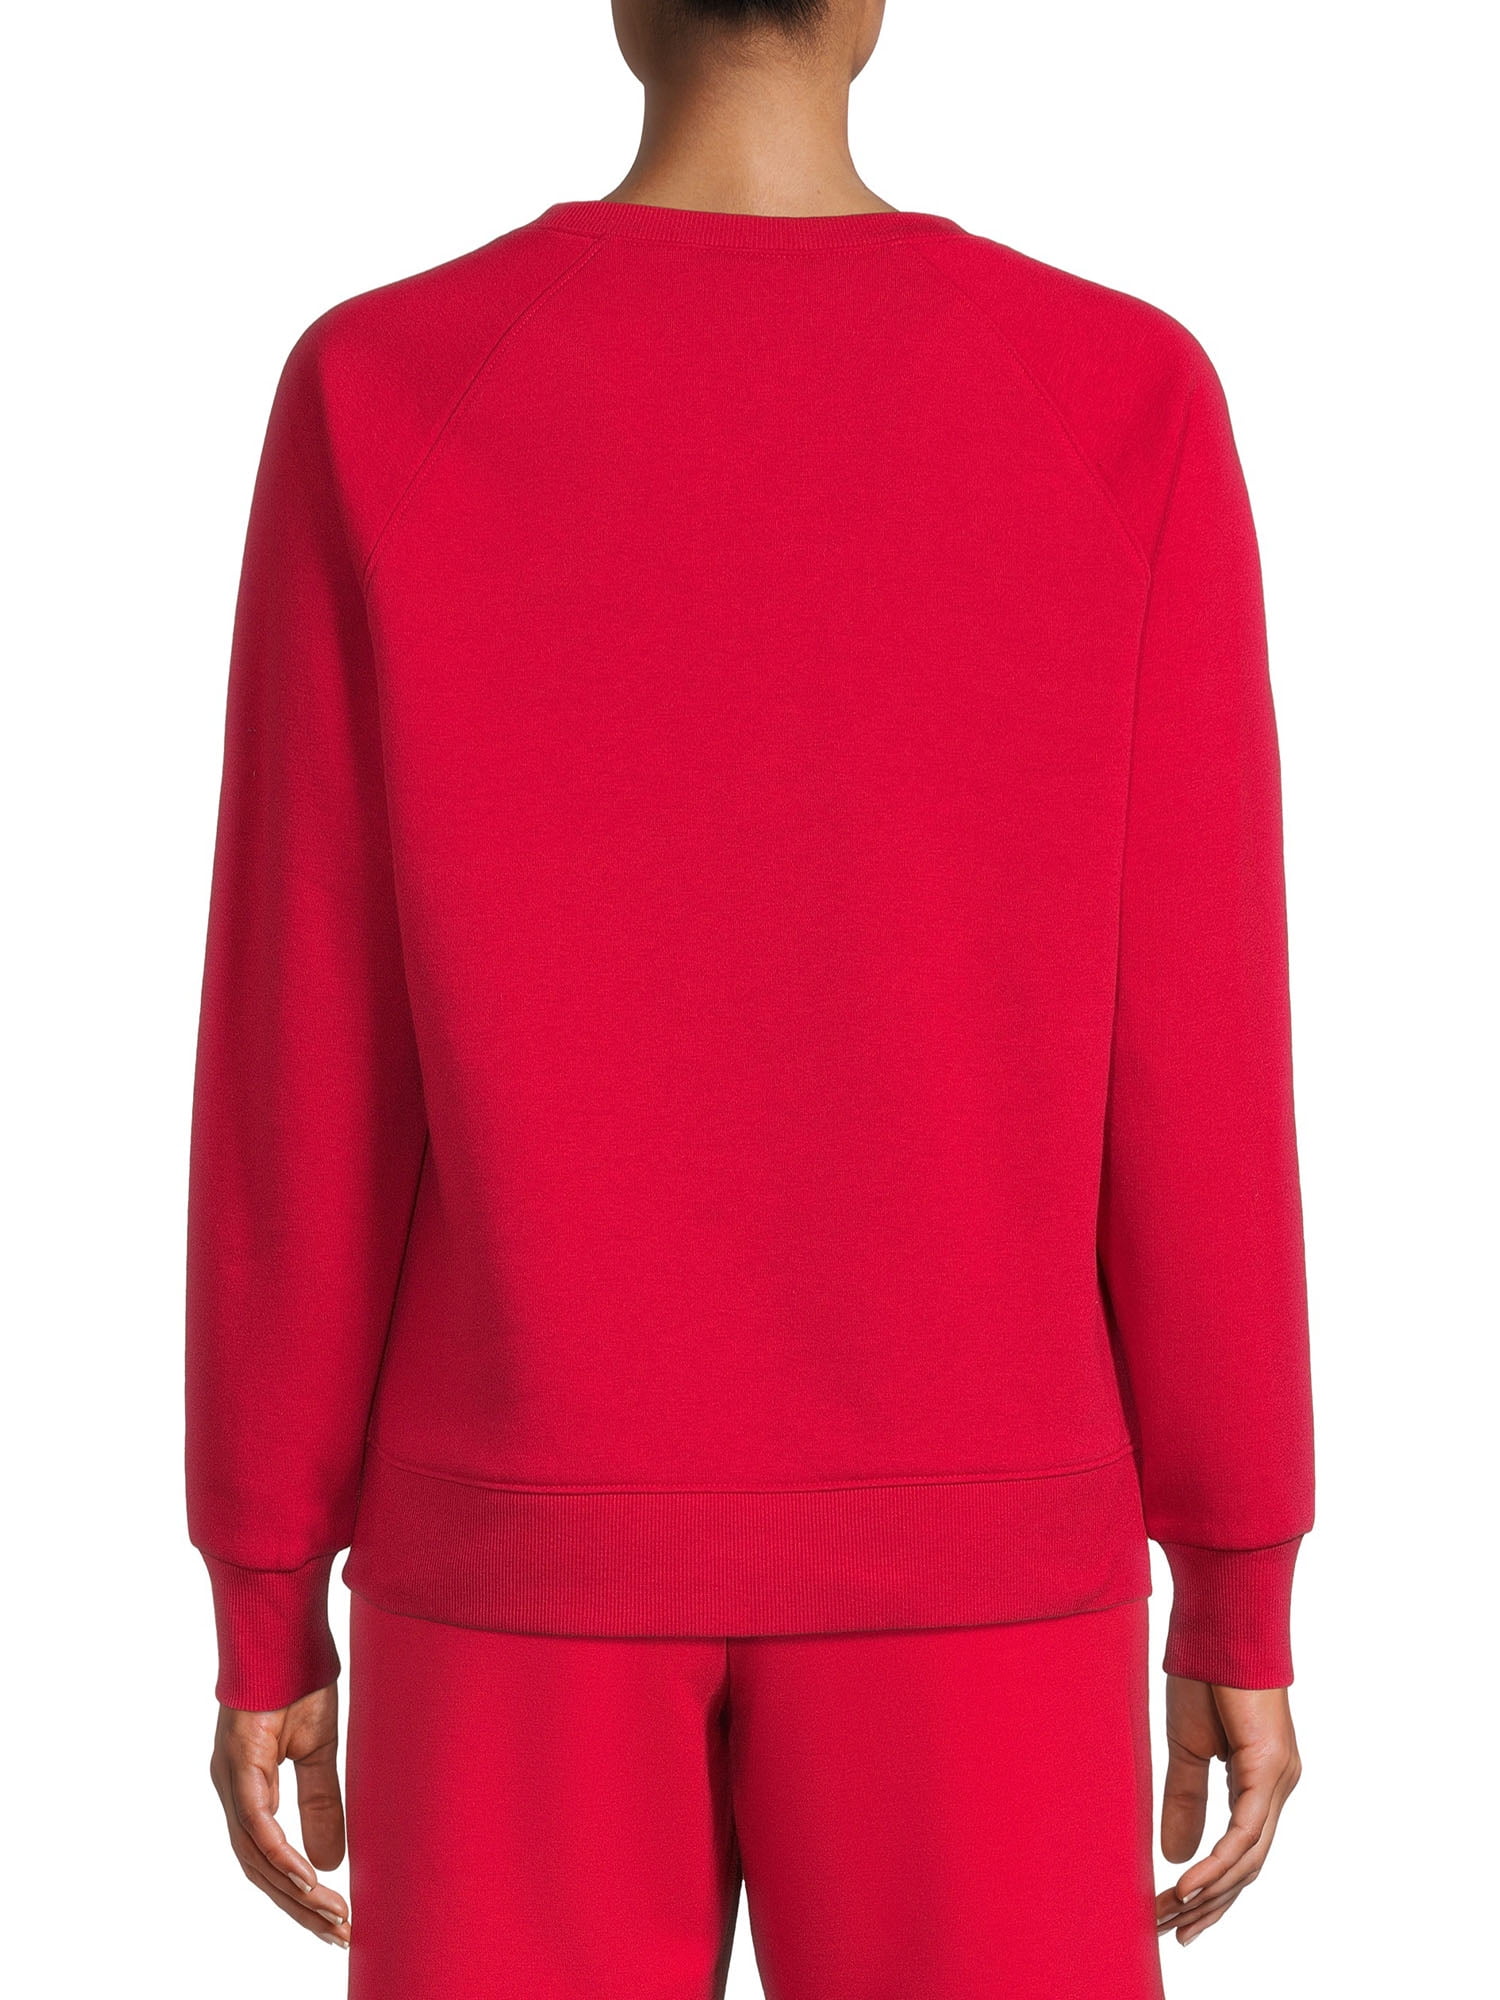 Athletic Works Women's Fleece Crewneck Sweatshirt, Sizes XS-XXXL 